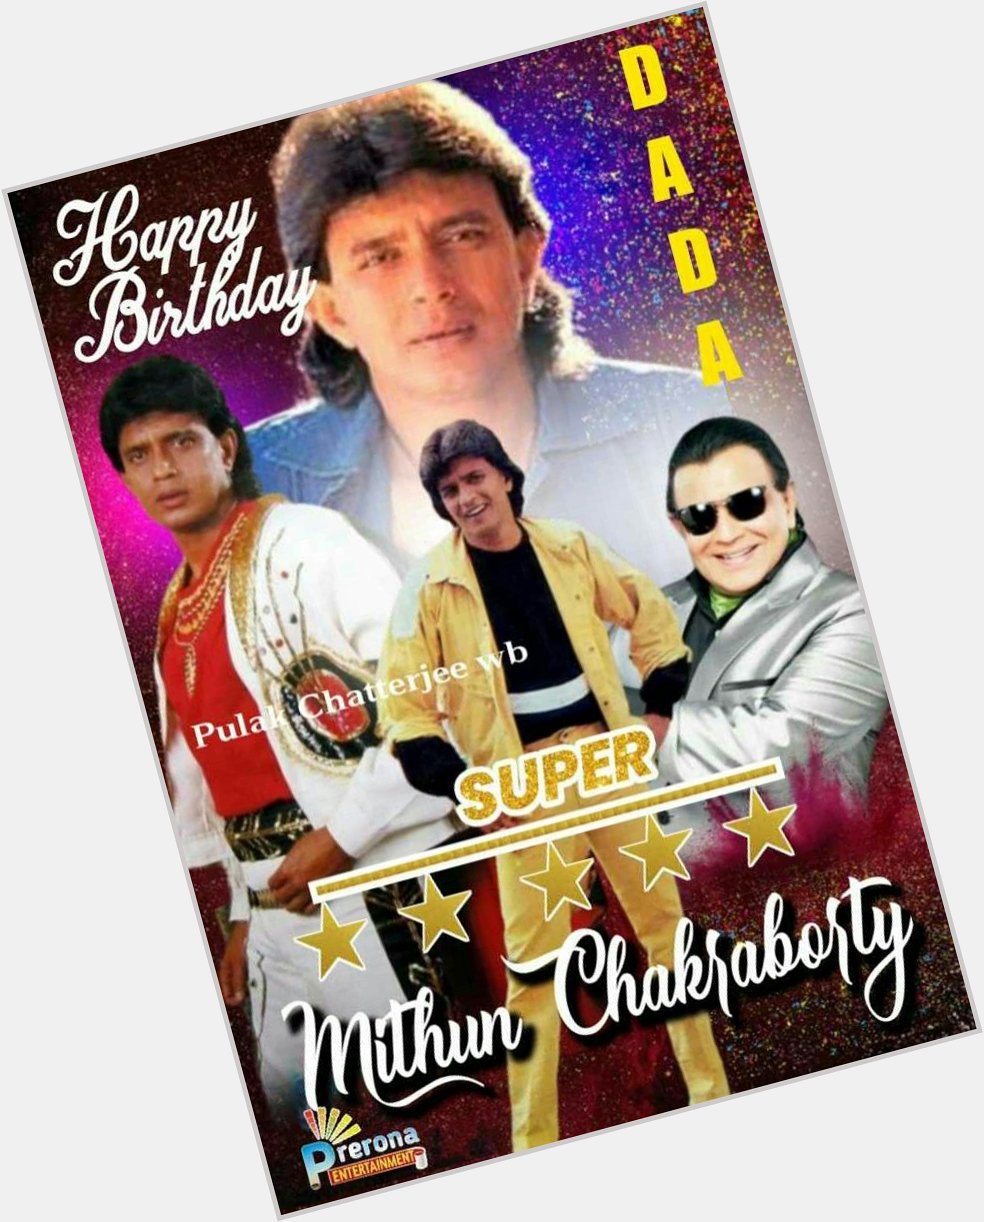 Happy Birthday Mithun Chakraborty 